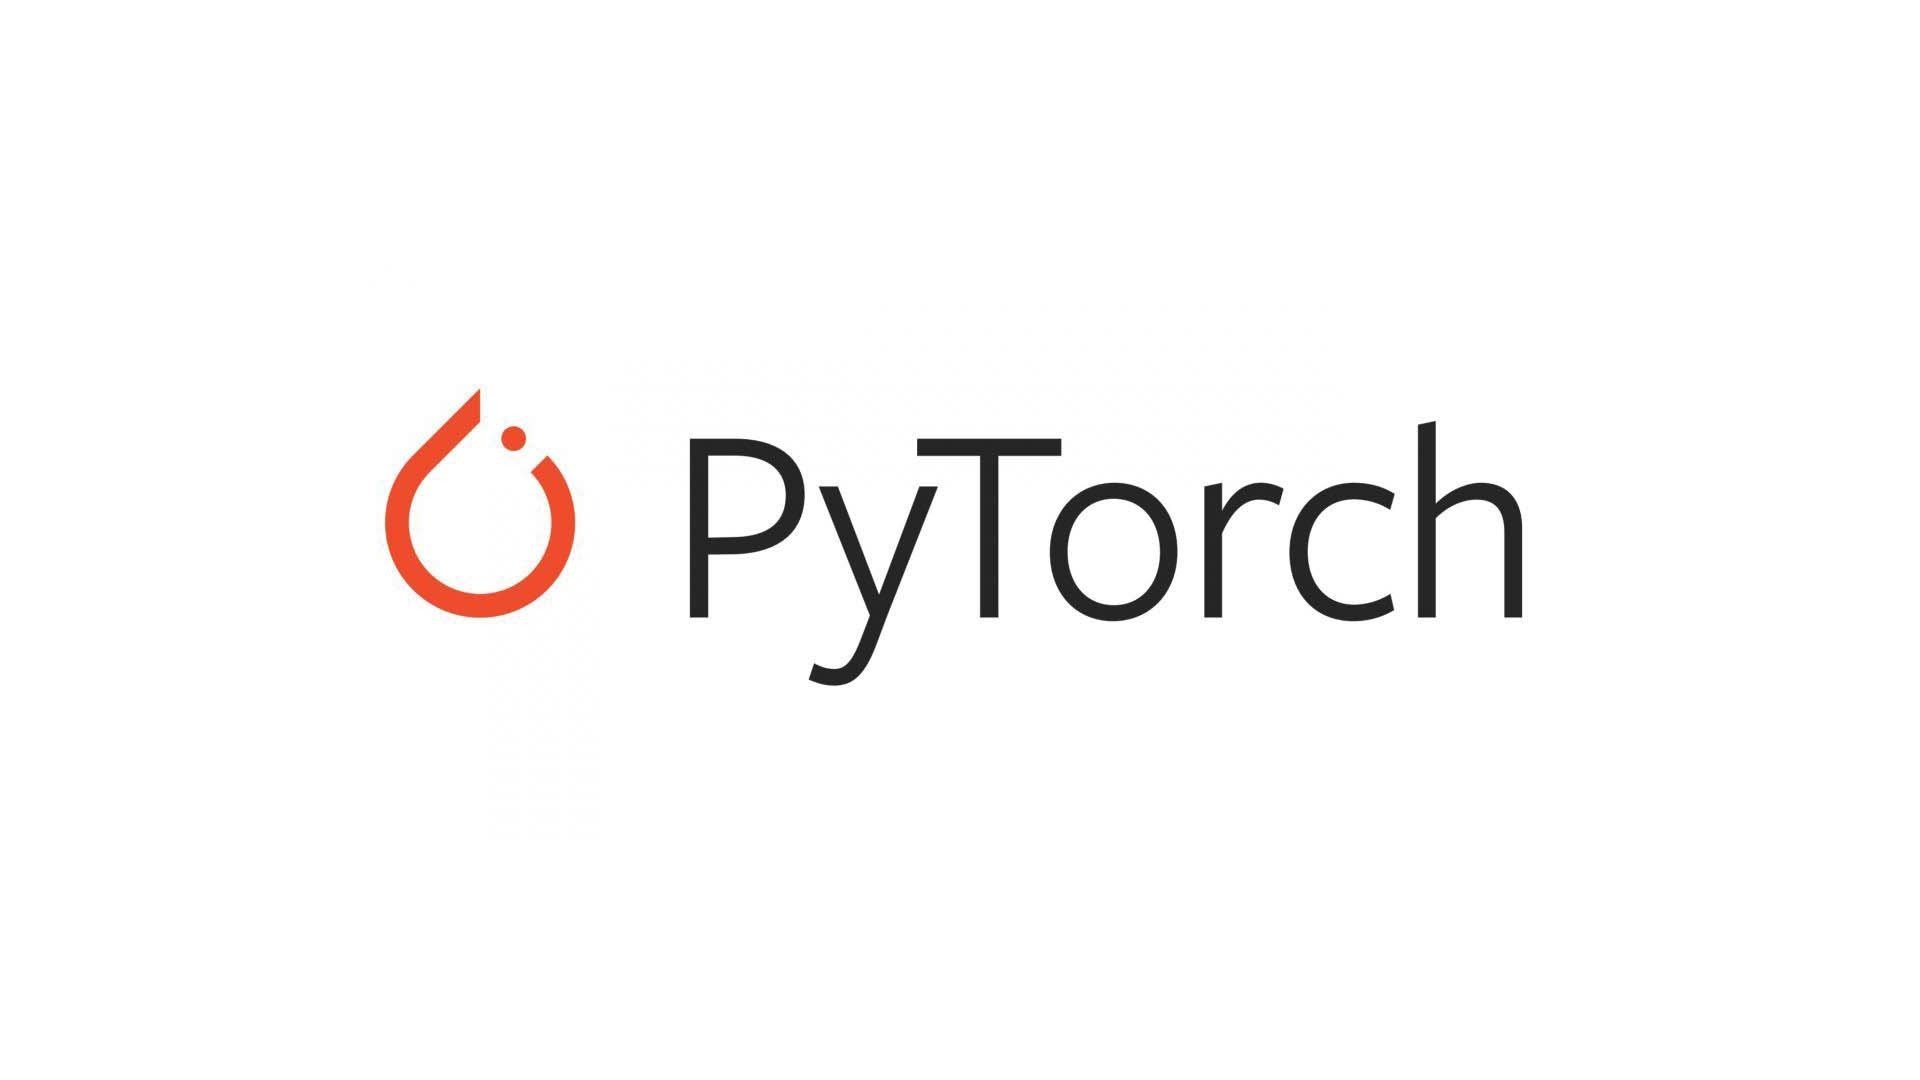 PYTORCH. PYTORCH лого. PYTORCH Python. PYTORCH картинка. Py torch